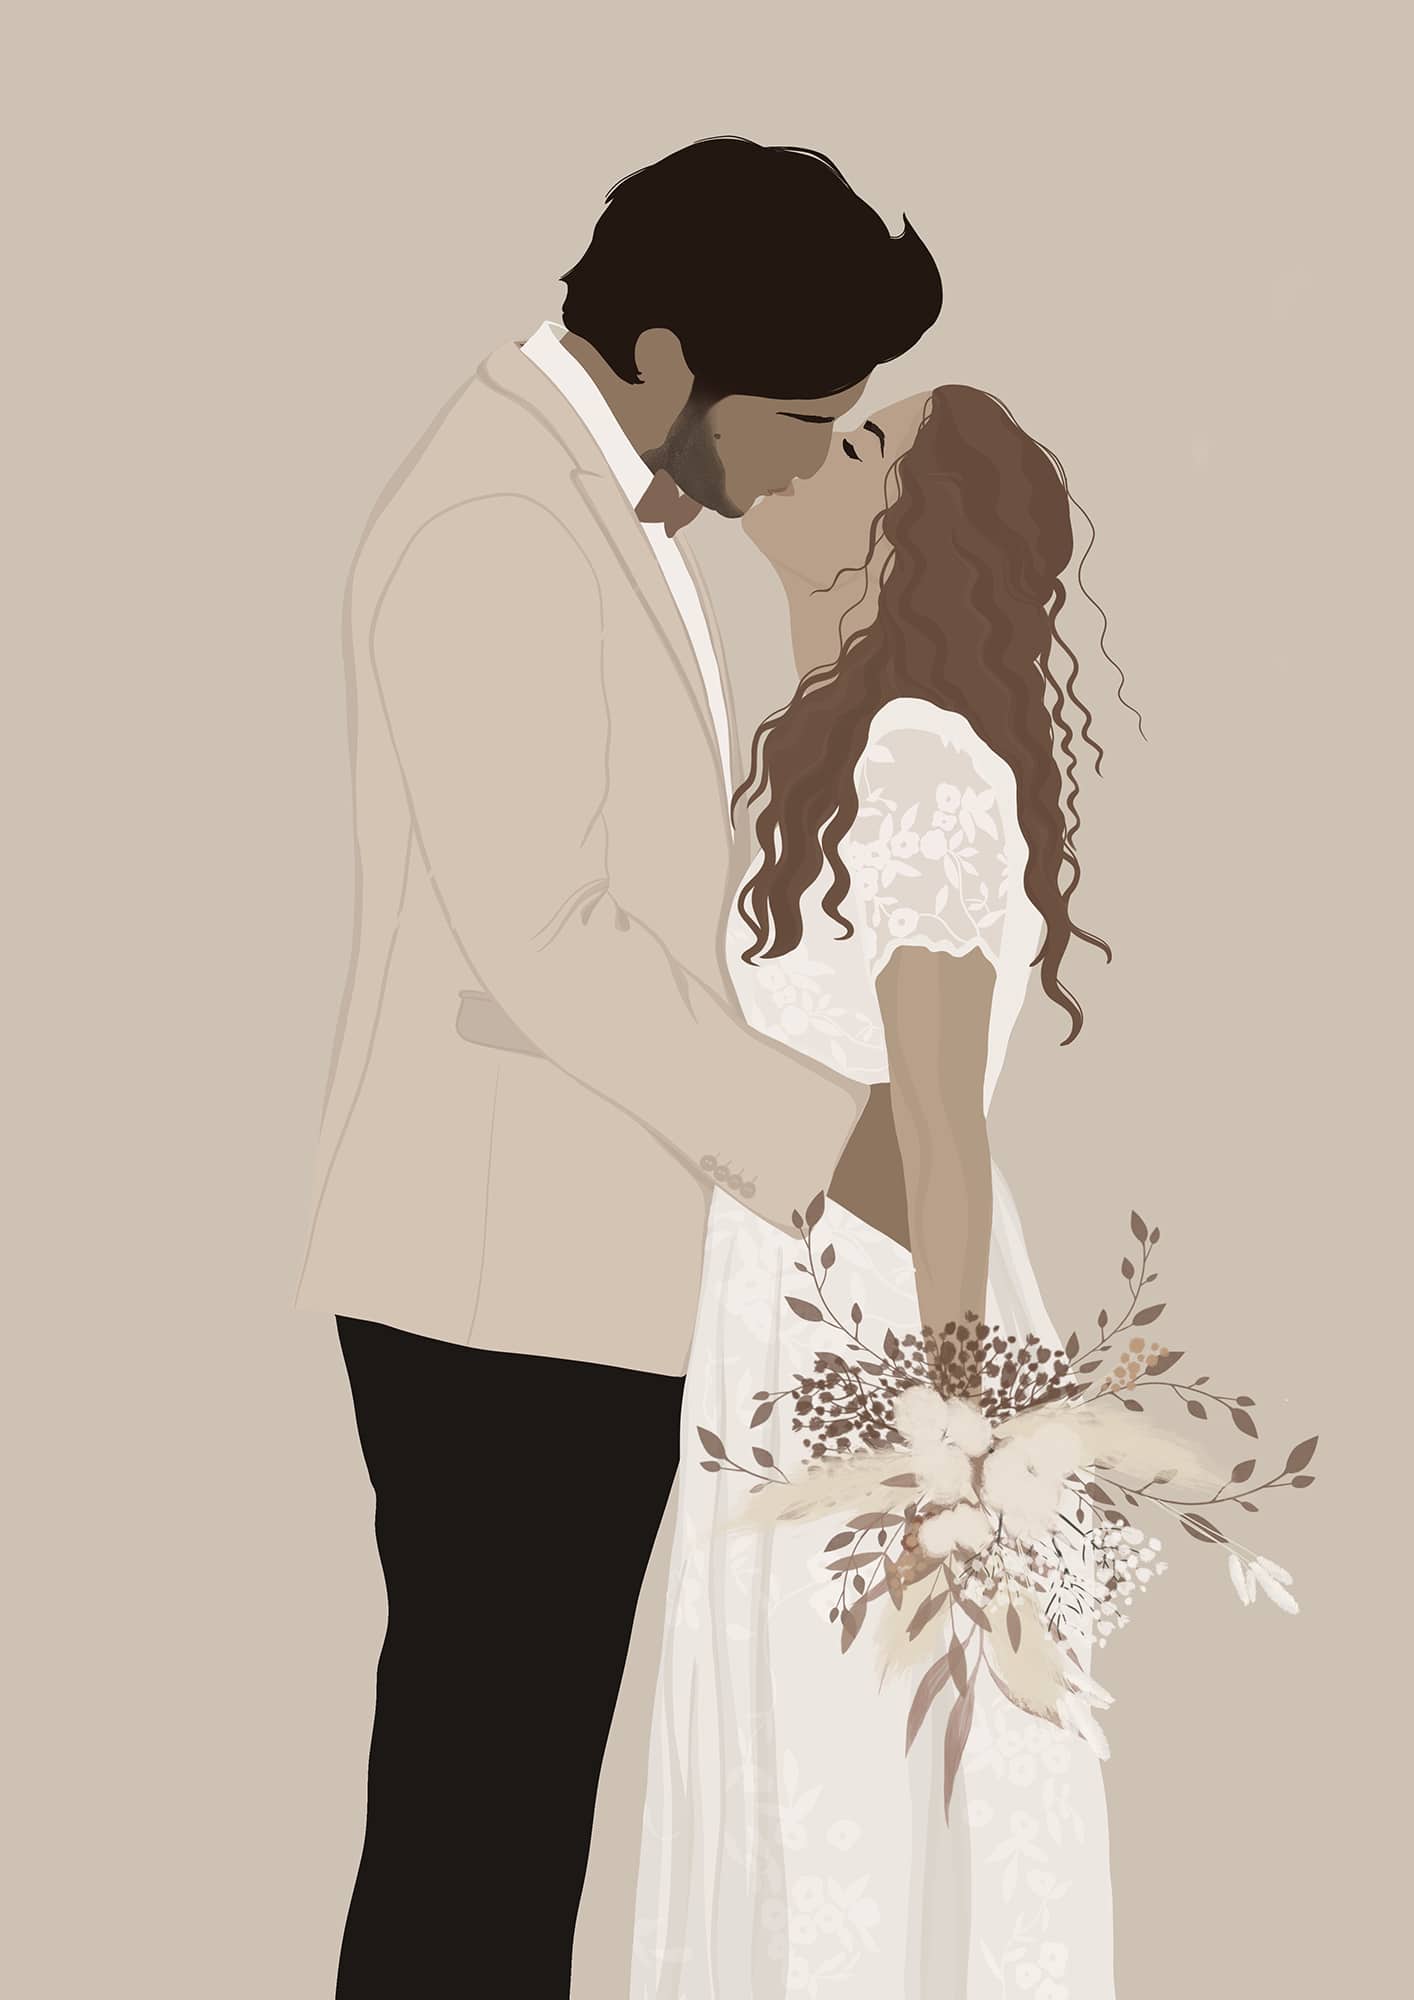 personalized wedding gift_wall art couple illustration